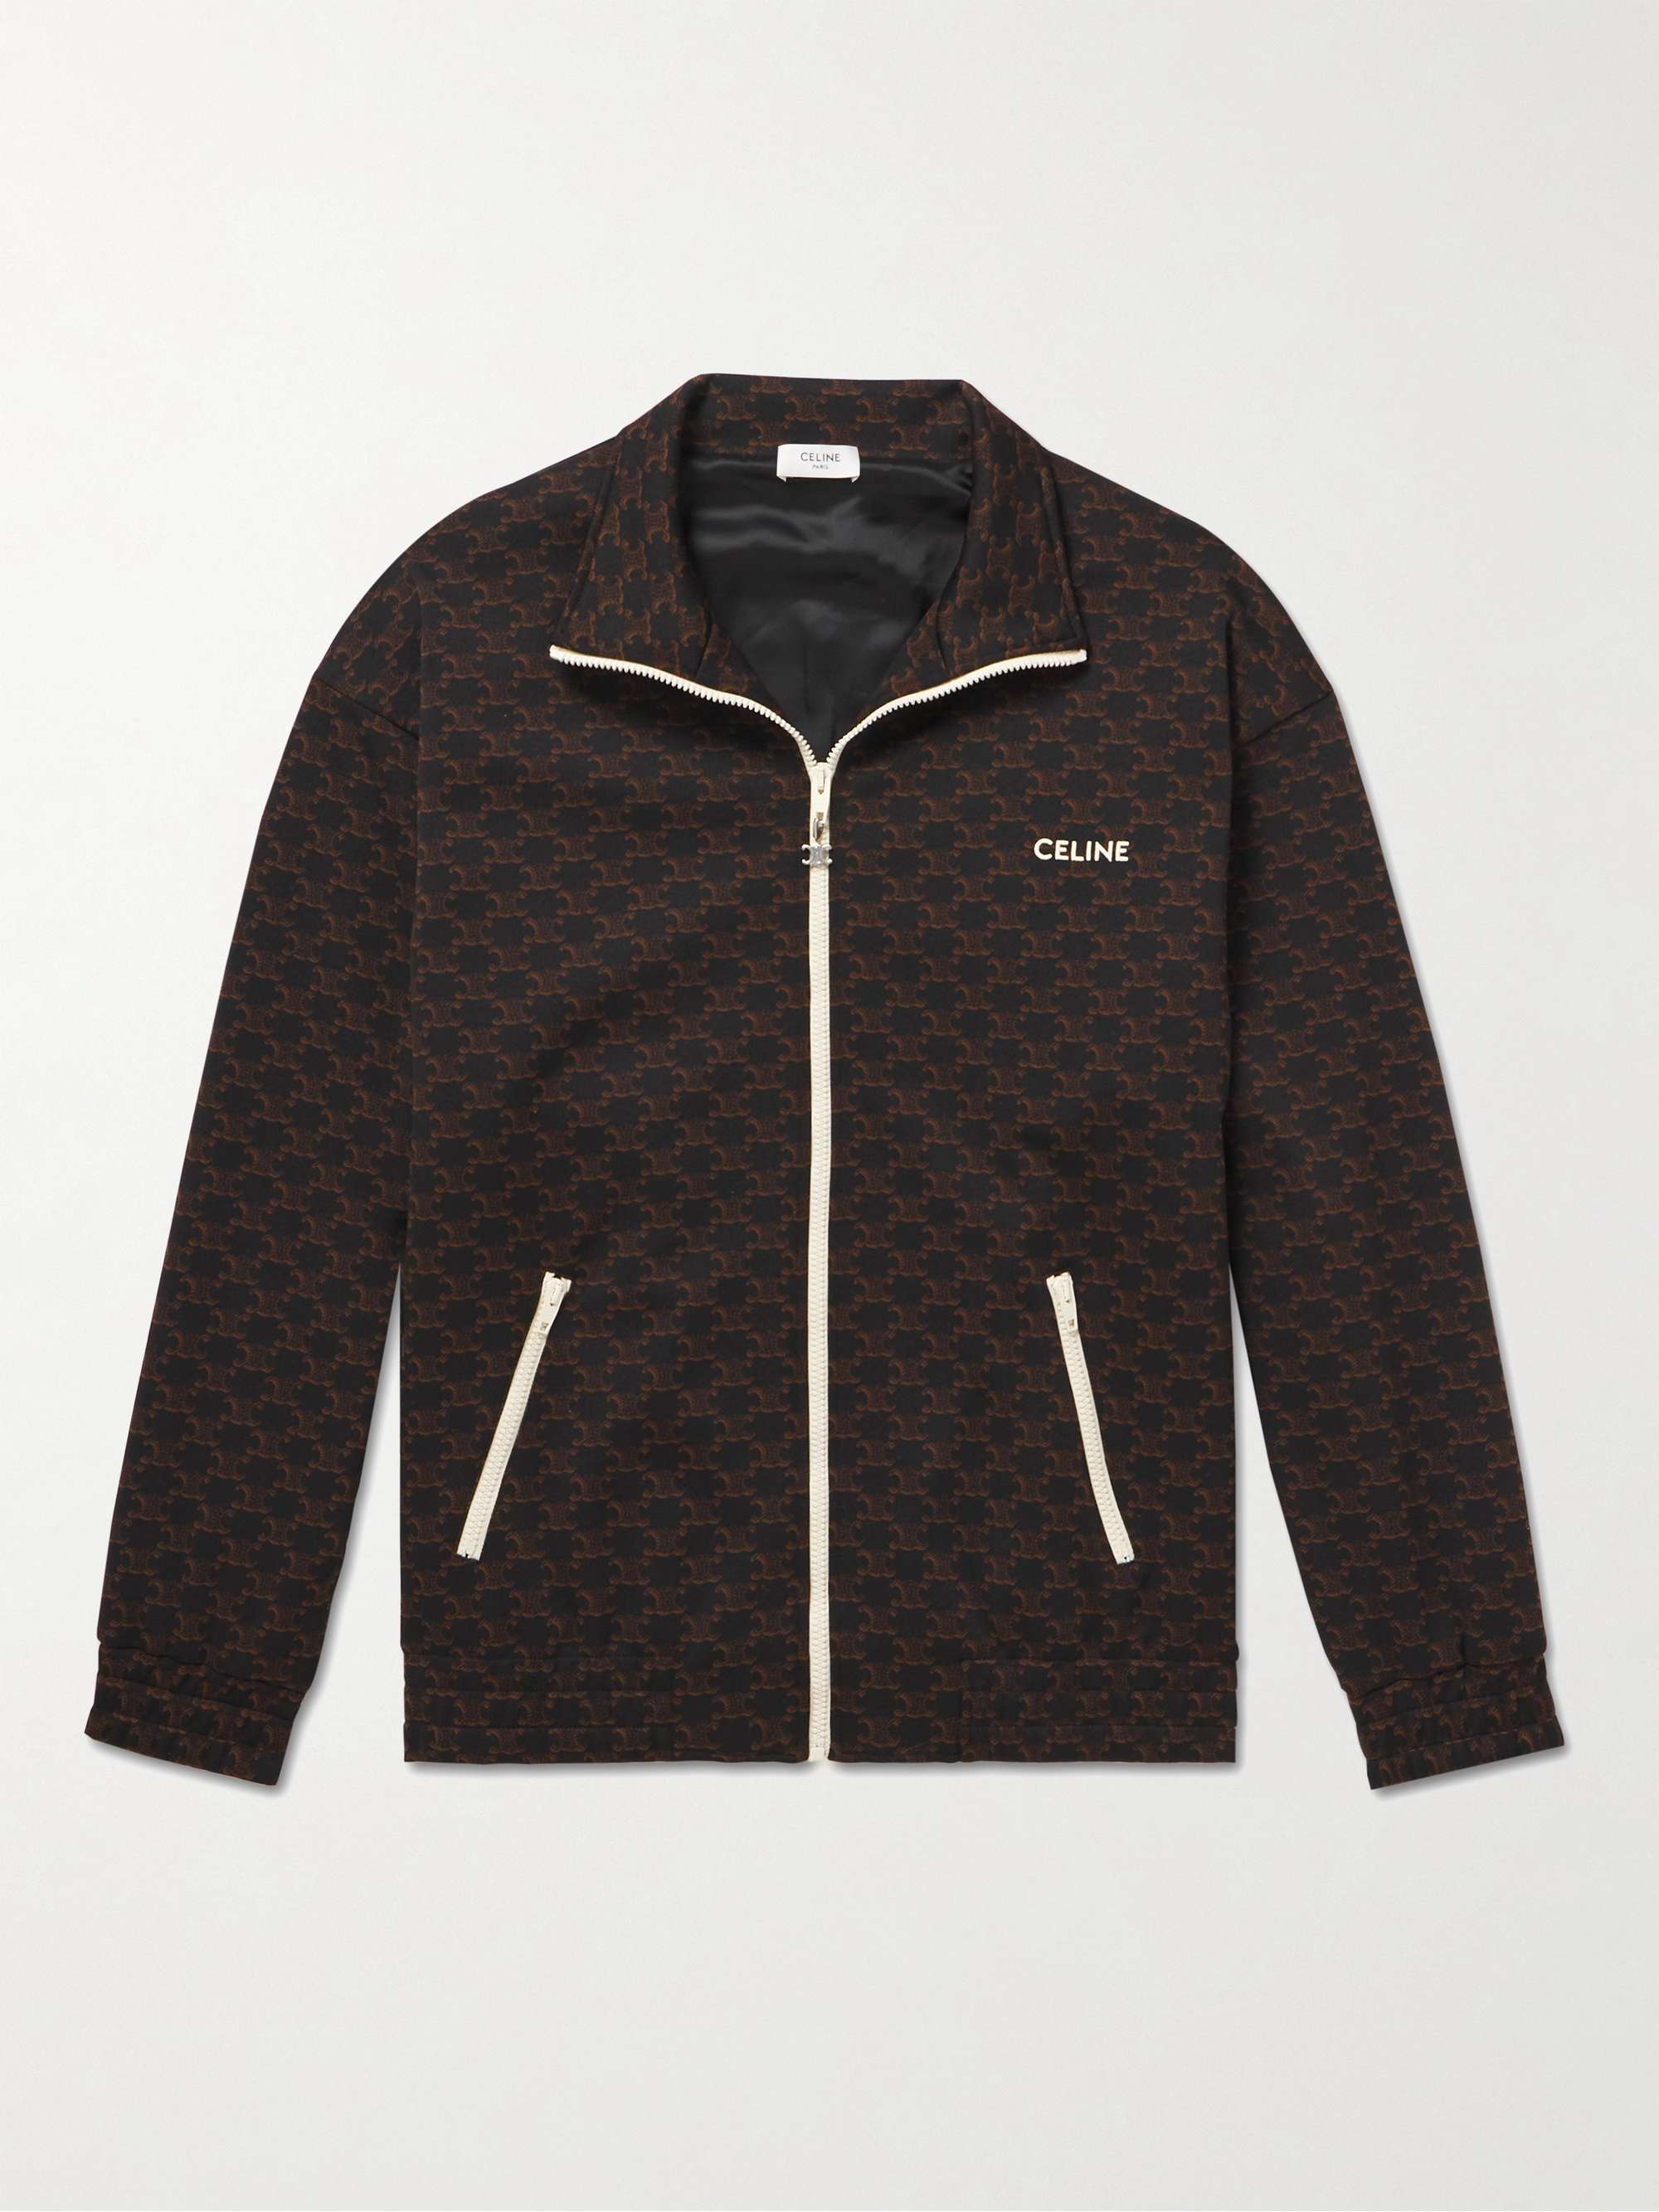 Celine Homme Triomphe logo-print Tech-Jersey Track Jacket - Men - Black Sweats - L